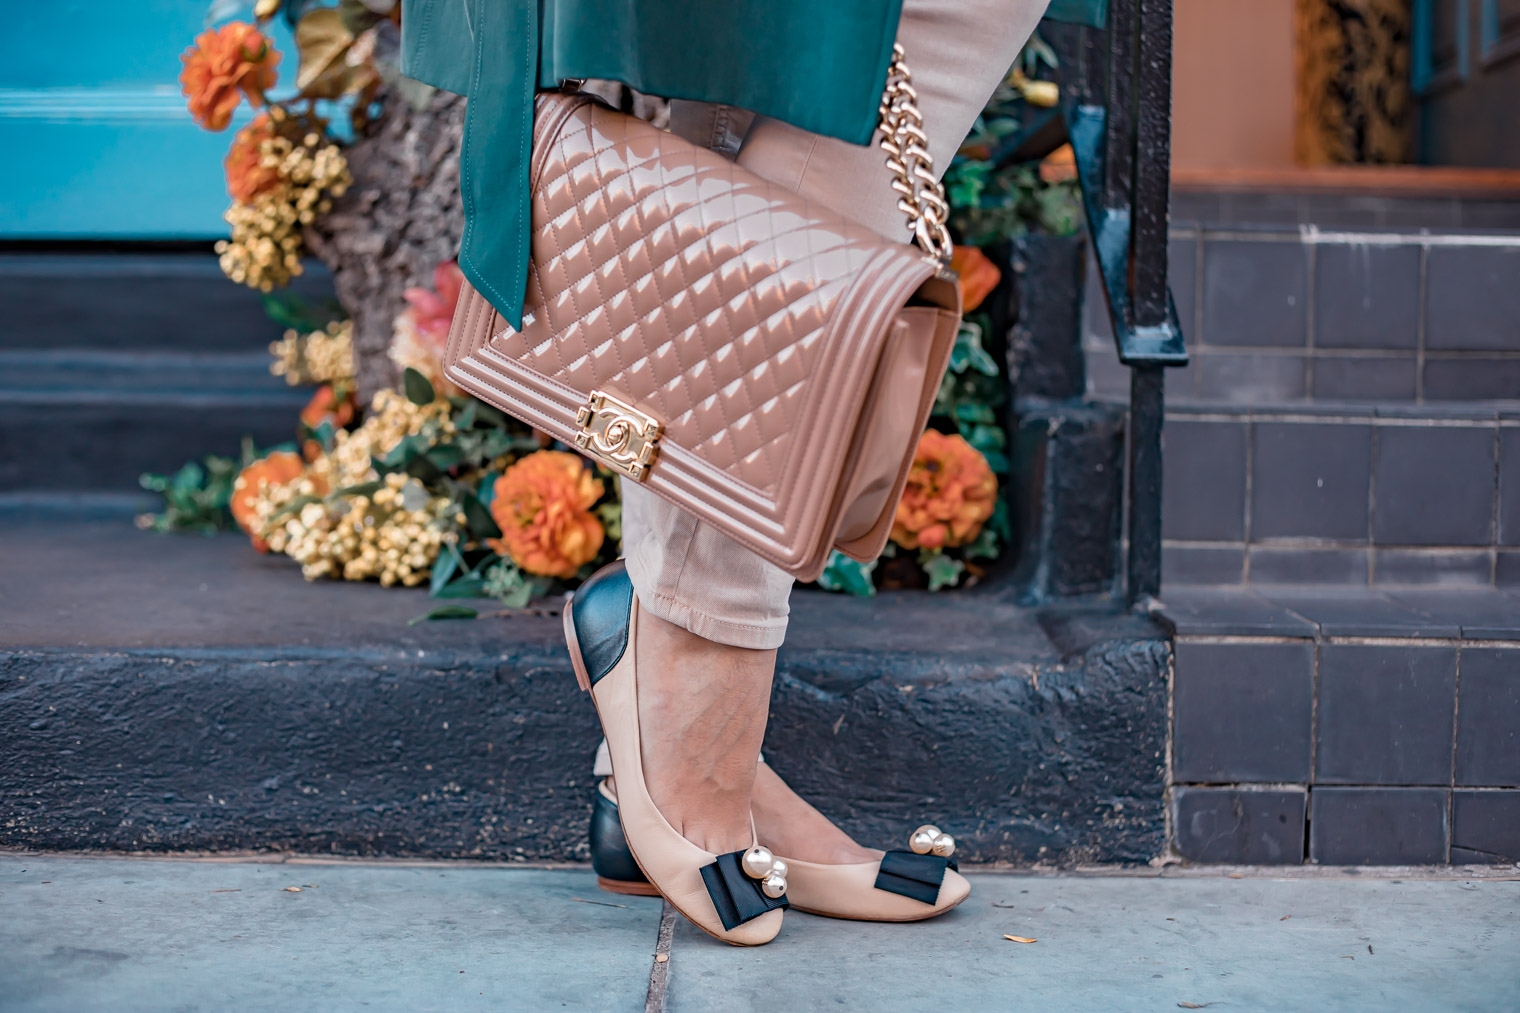 Chanel Boy bag Carolina Herrera shoes fall outfit inspiration